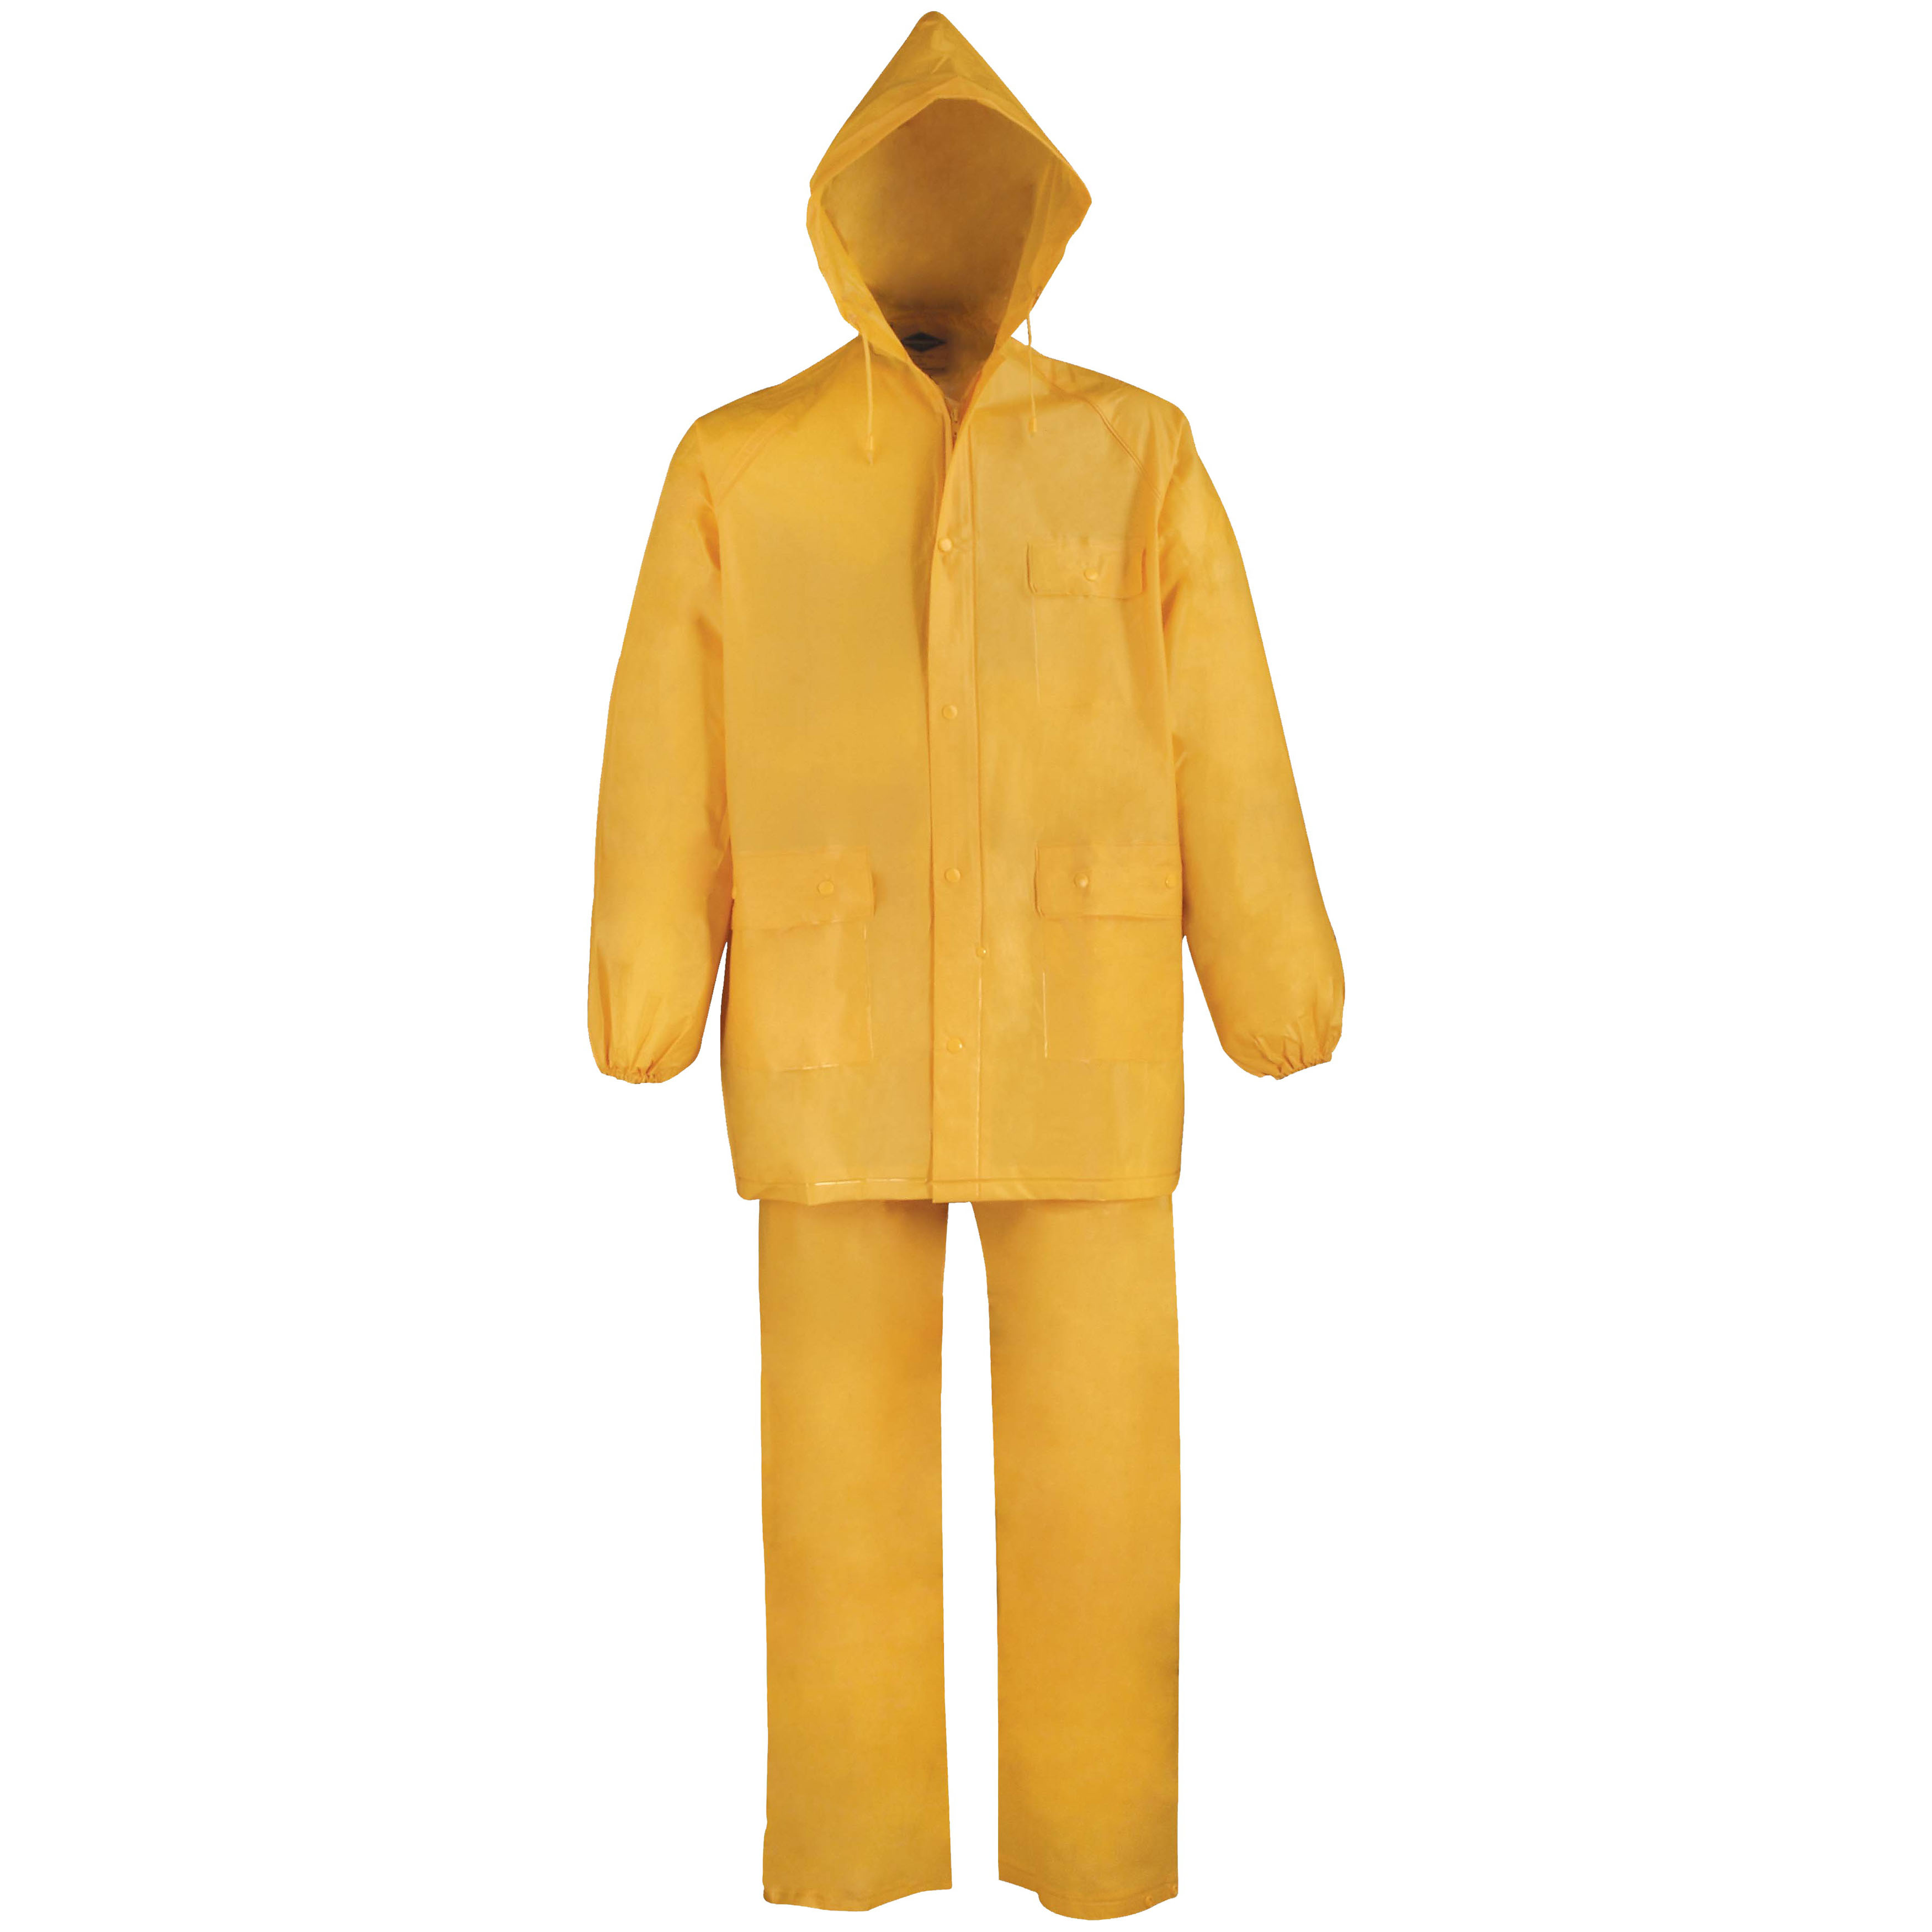 8127LG Rain Suit, L, 29-1/2 in Inseam, PVC, Yellow, Drawstring Collar, Zipper with Storm Flap Closure